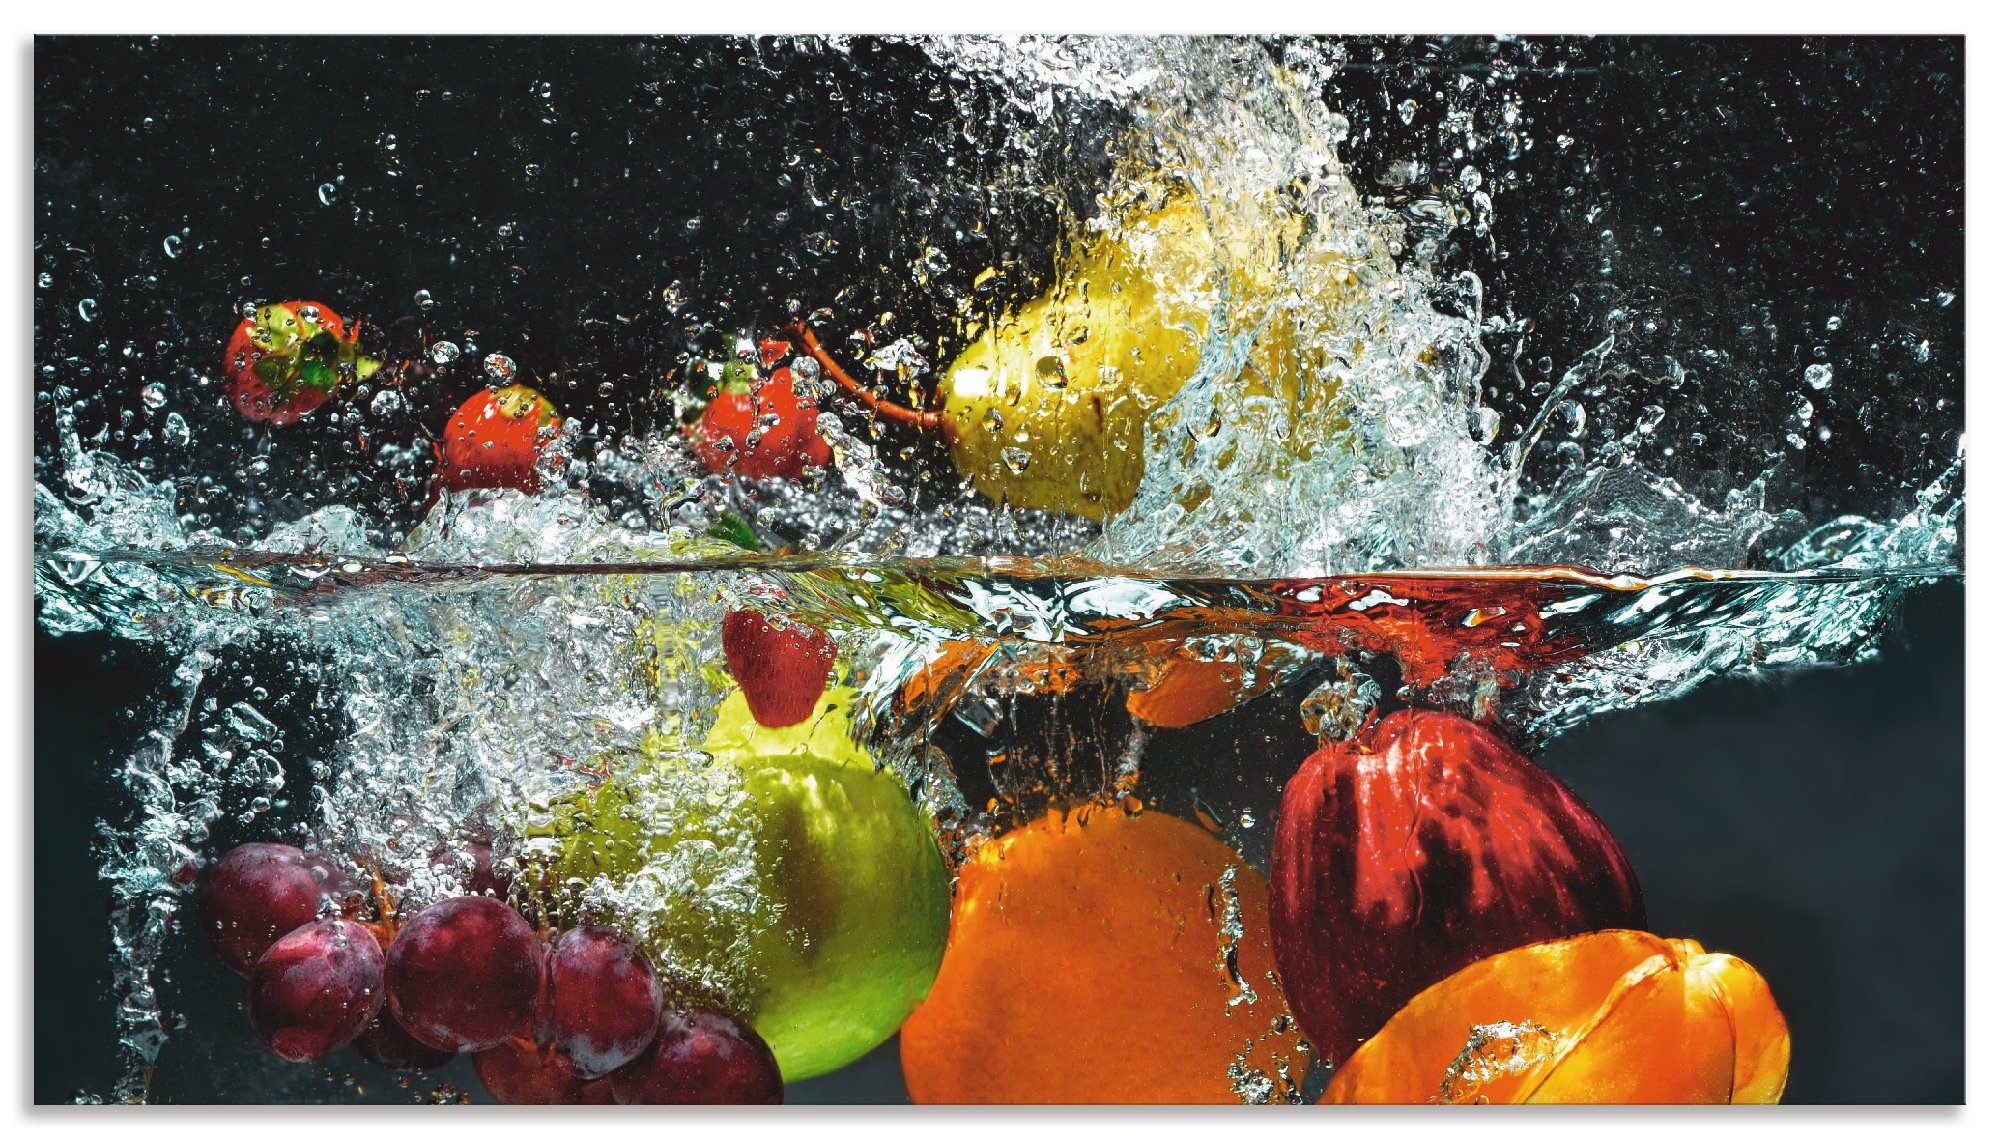 Artland Keukenwand Fruit in opspattend water zelfklevend in vele maten - spatscherm keuken achter kookplaat en spoelbak als wandbescherming tegen vet, water en vuil - achterwand, w